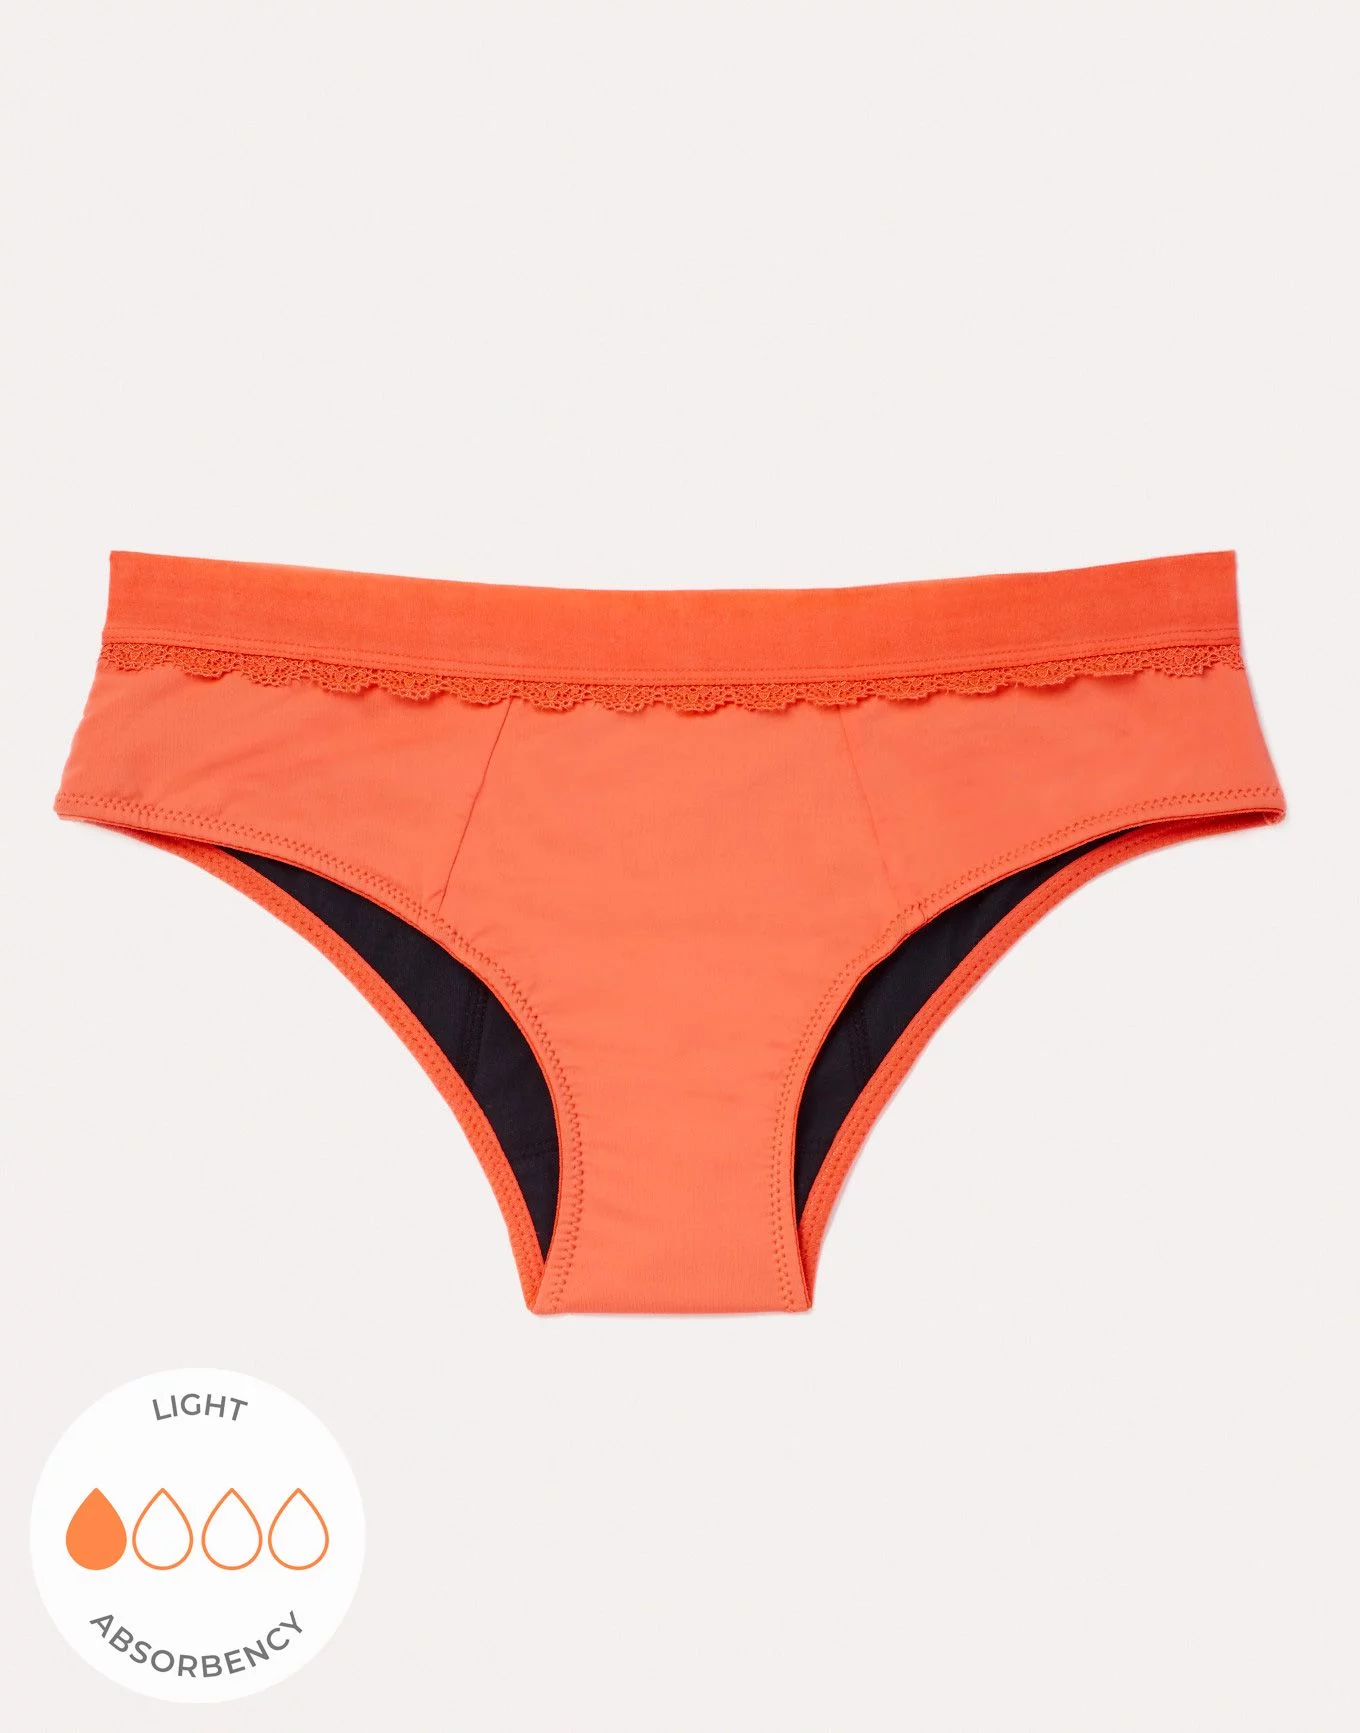 CAICJ98 Underwear Women Womens No Show Seamless Underwear, Amazing Stretch  & No Panty Lines, Available in Plus Size,Orange